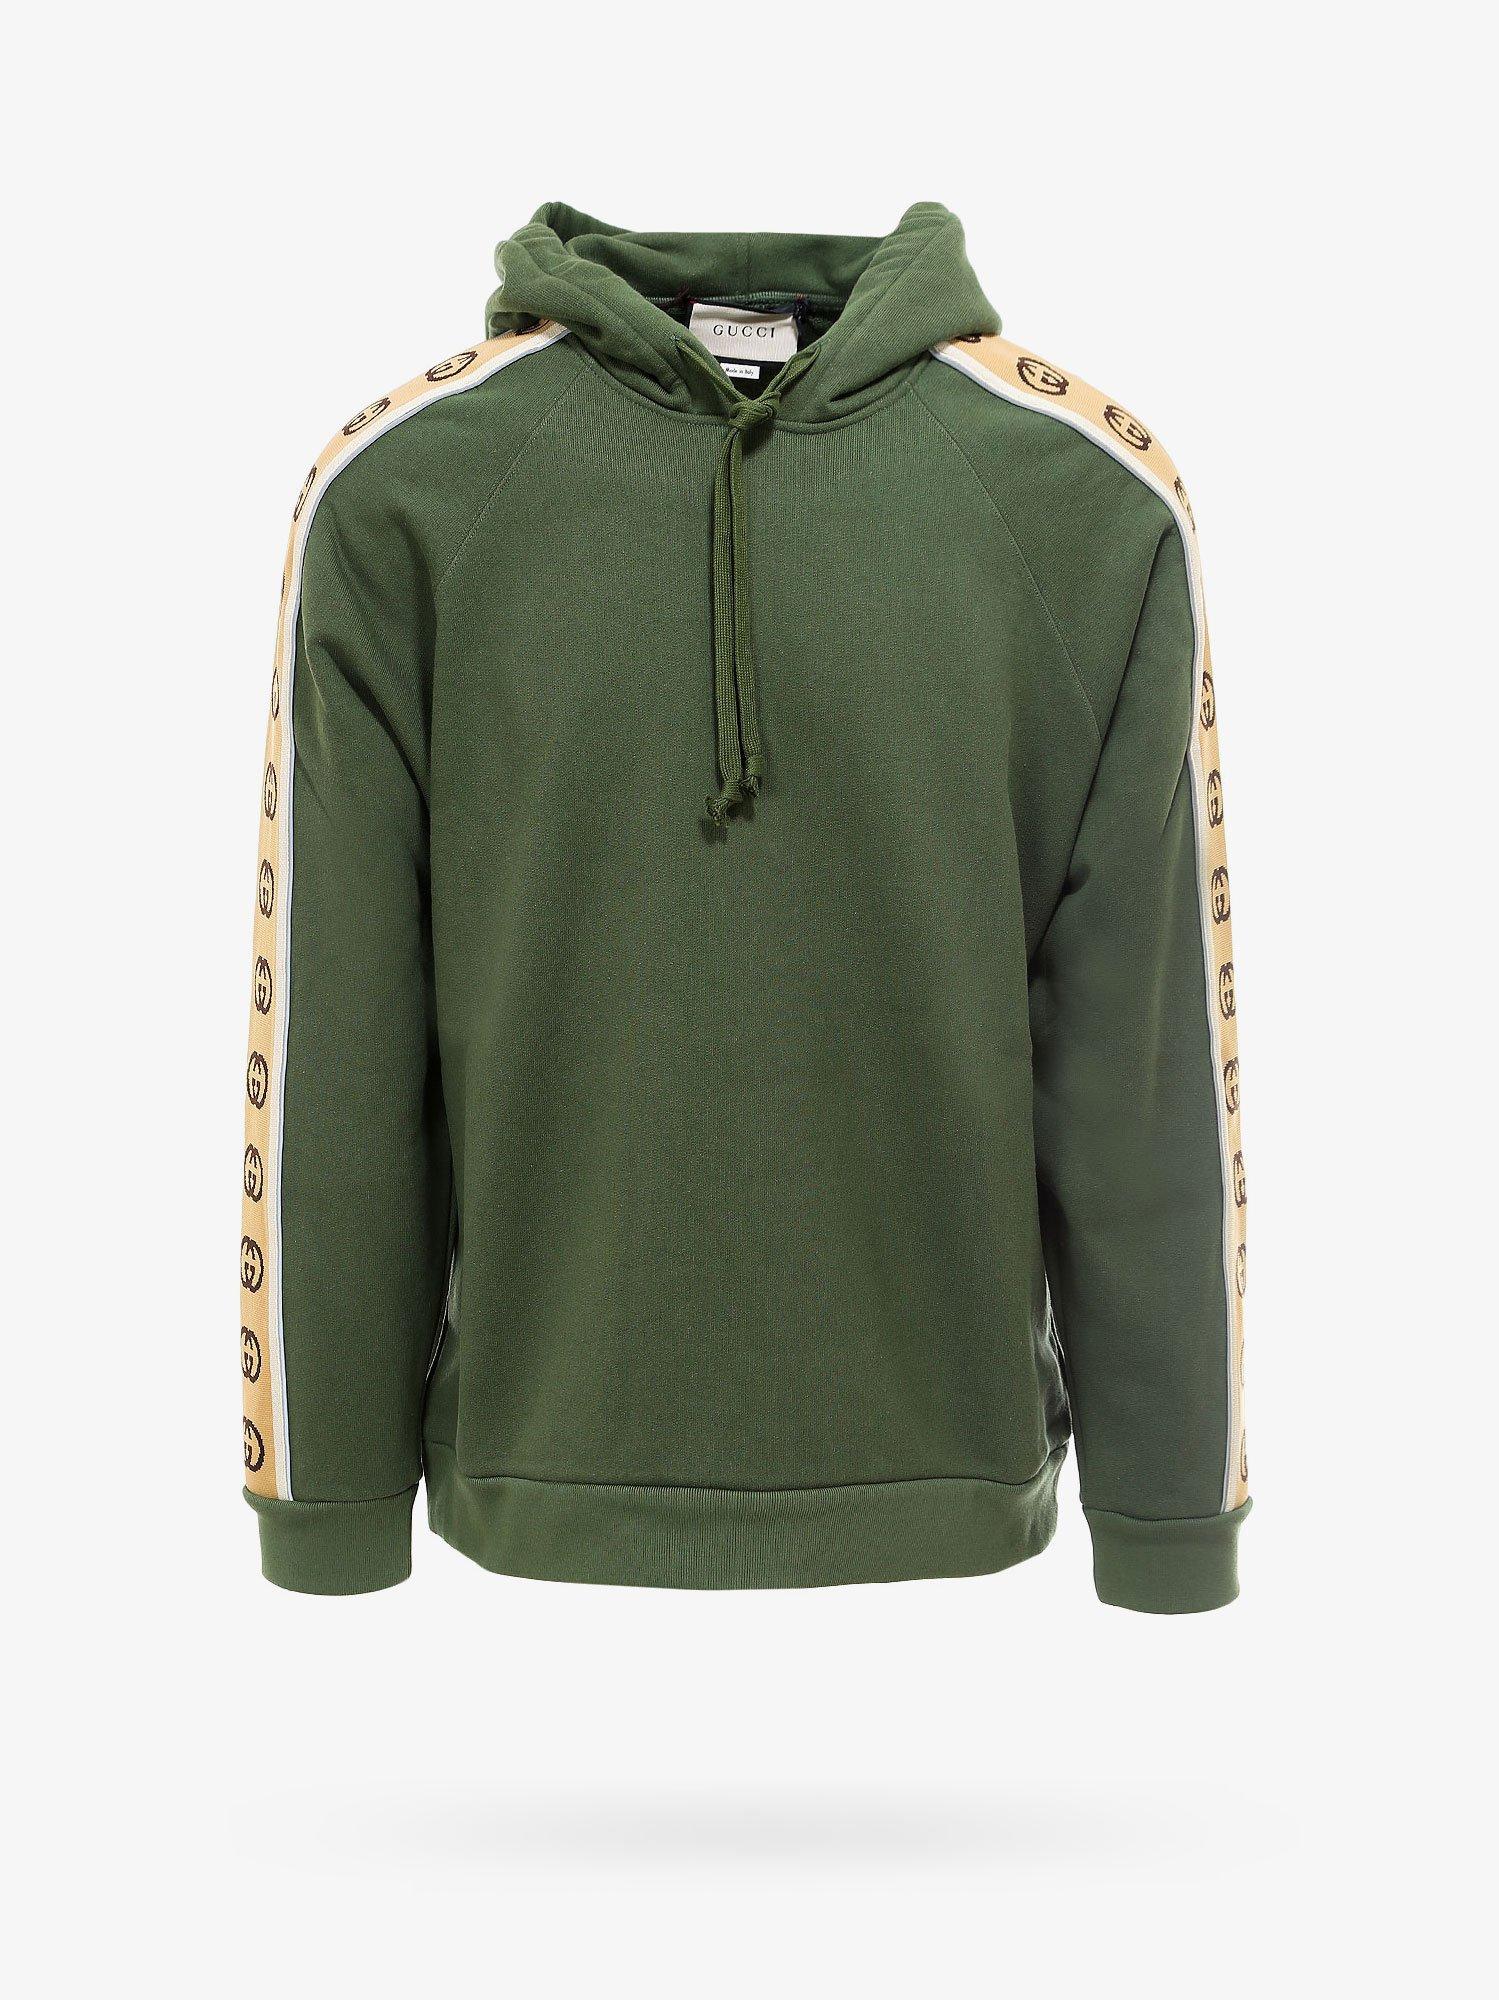 Gucci Cotton Sweatshirt in Green for Men - Lyst